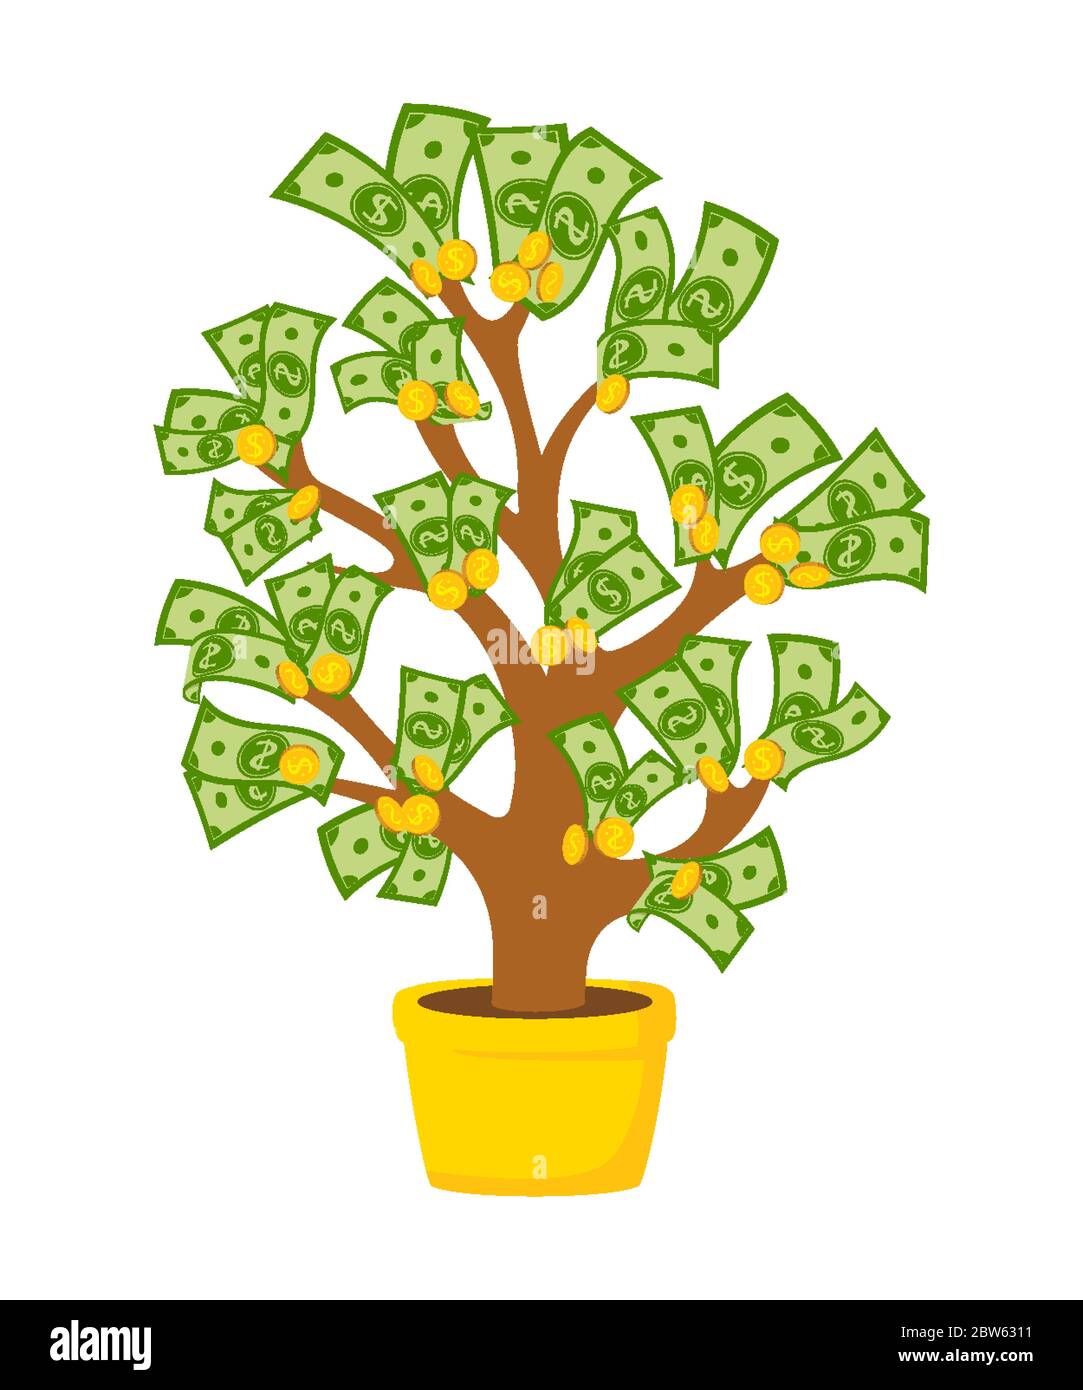 animated money tree